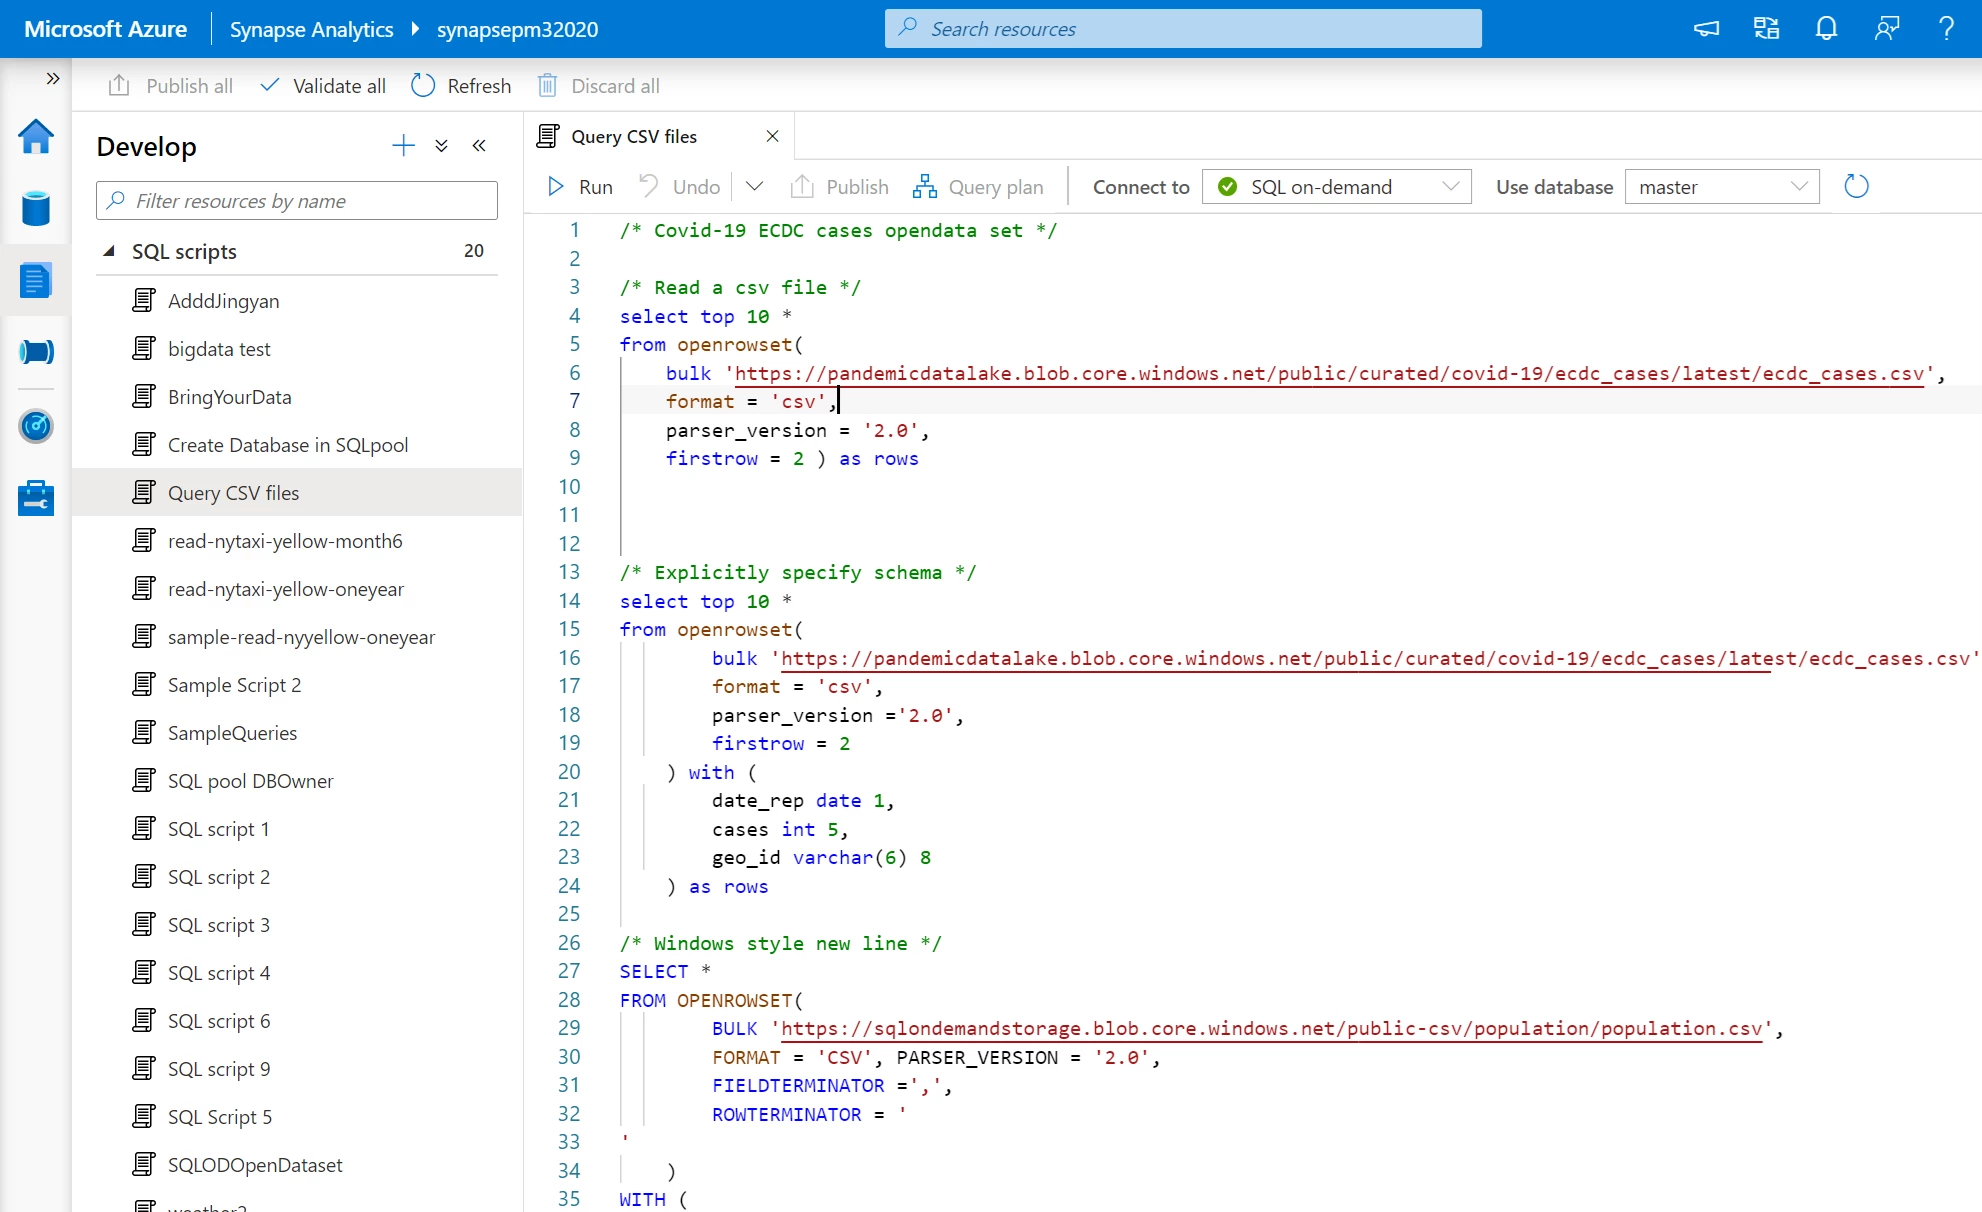 Sample SQL scripts open in the Develop hub of the Azure Synapse Studio under SQL scripts.